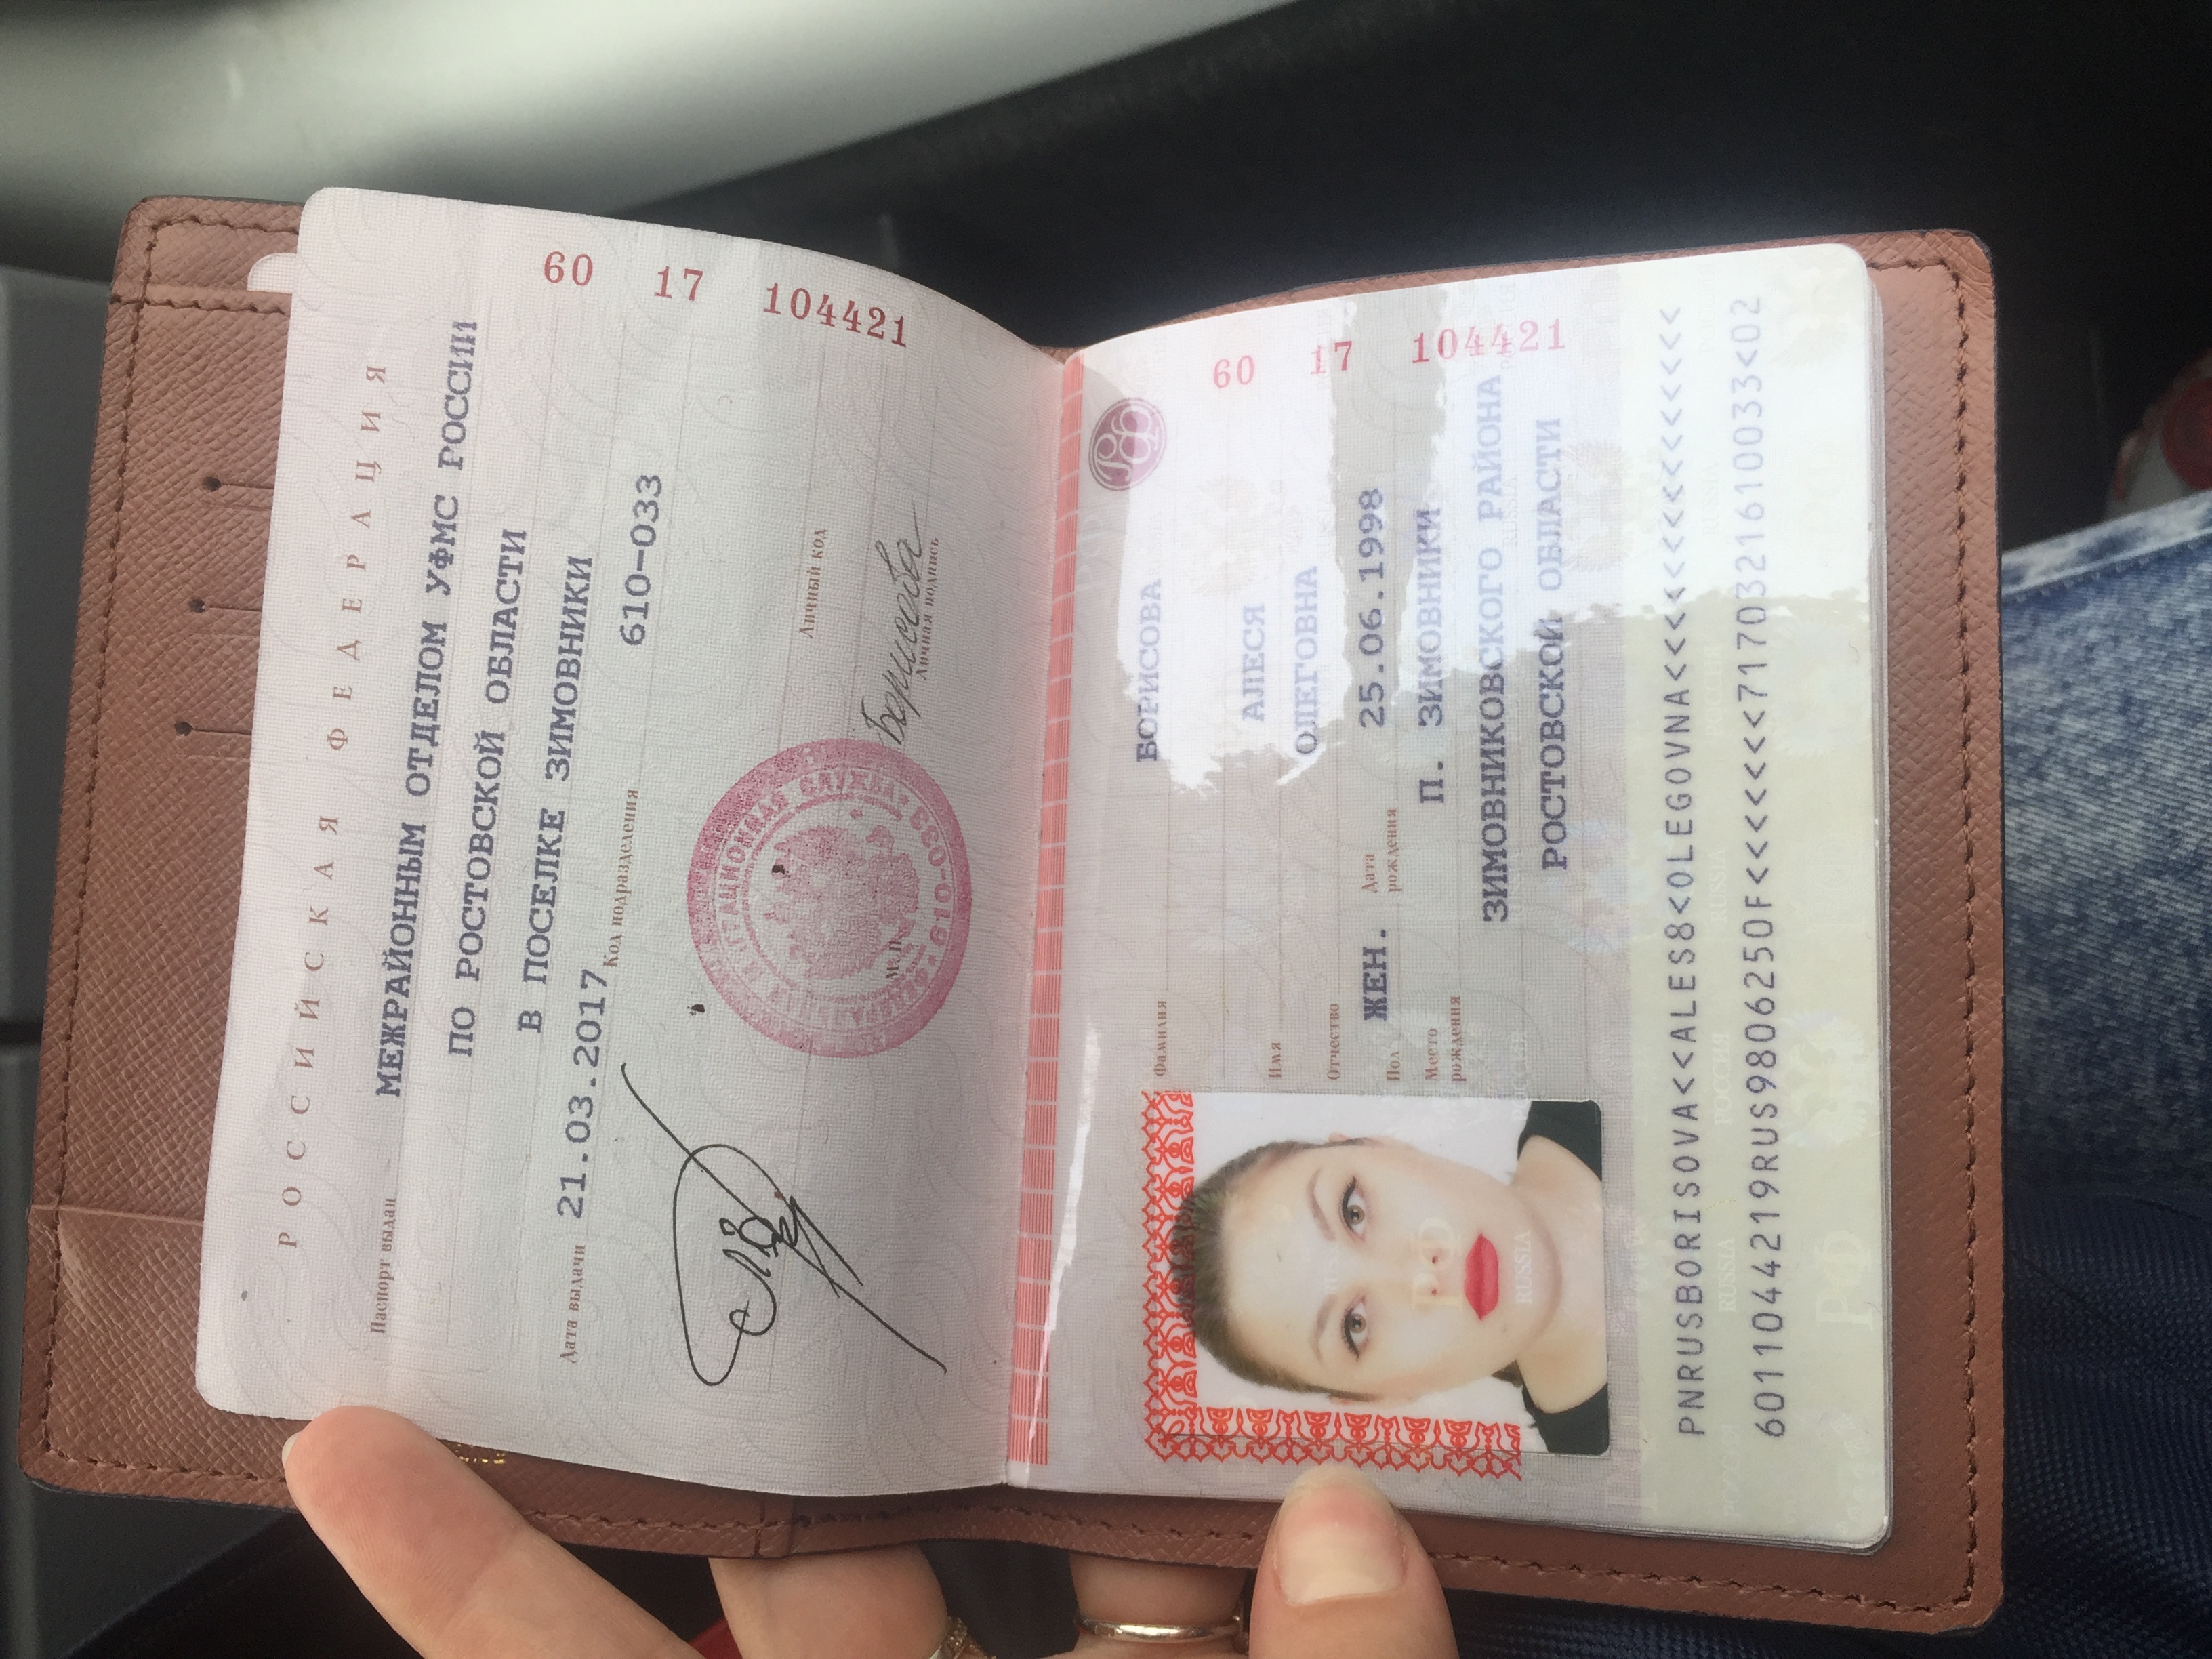 паспорт гражданина москва